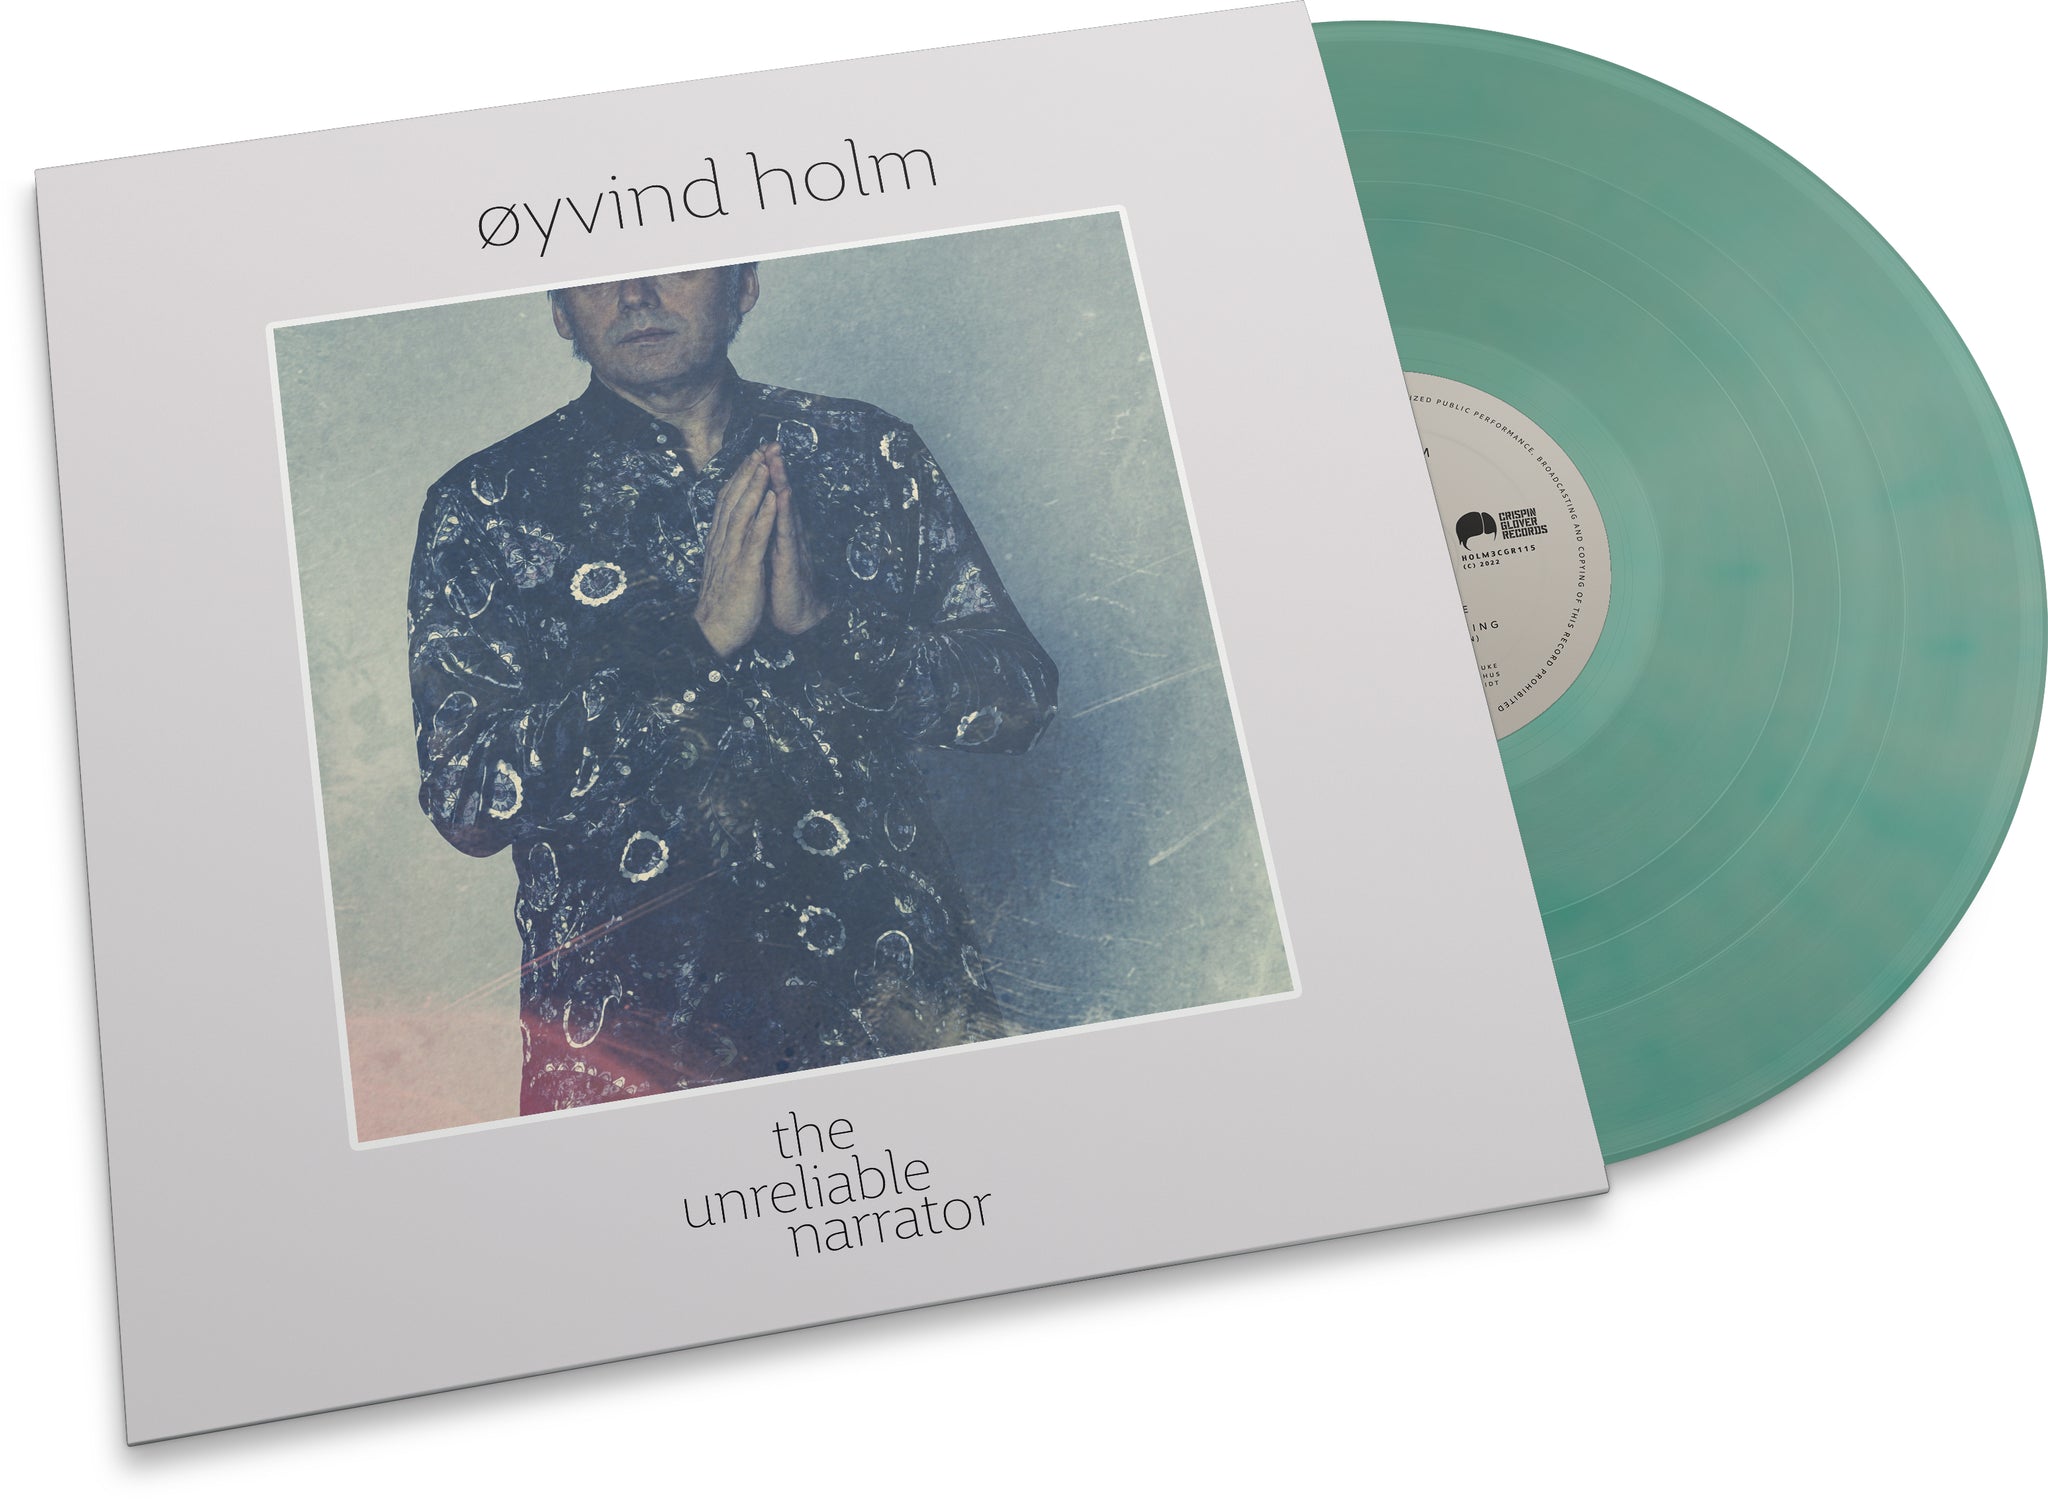 Øyvind Holm - "The Unreliable Narrator" (180G transparent vinyl with CD and Bonus 7" / Ultra LTD  version with signed photo)